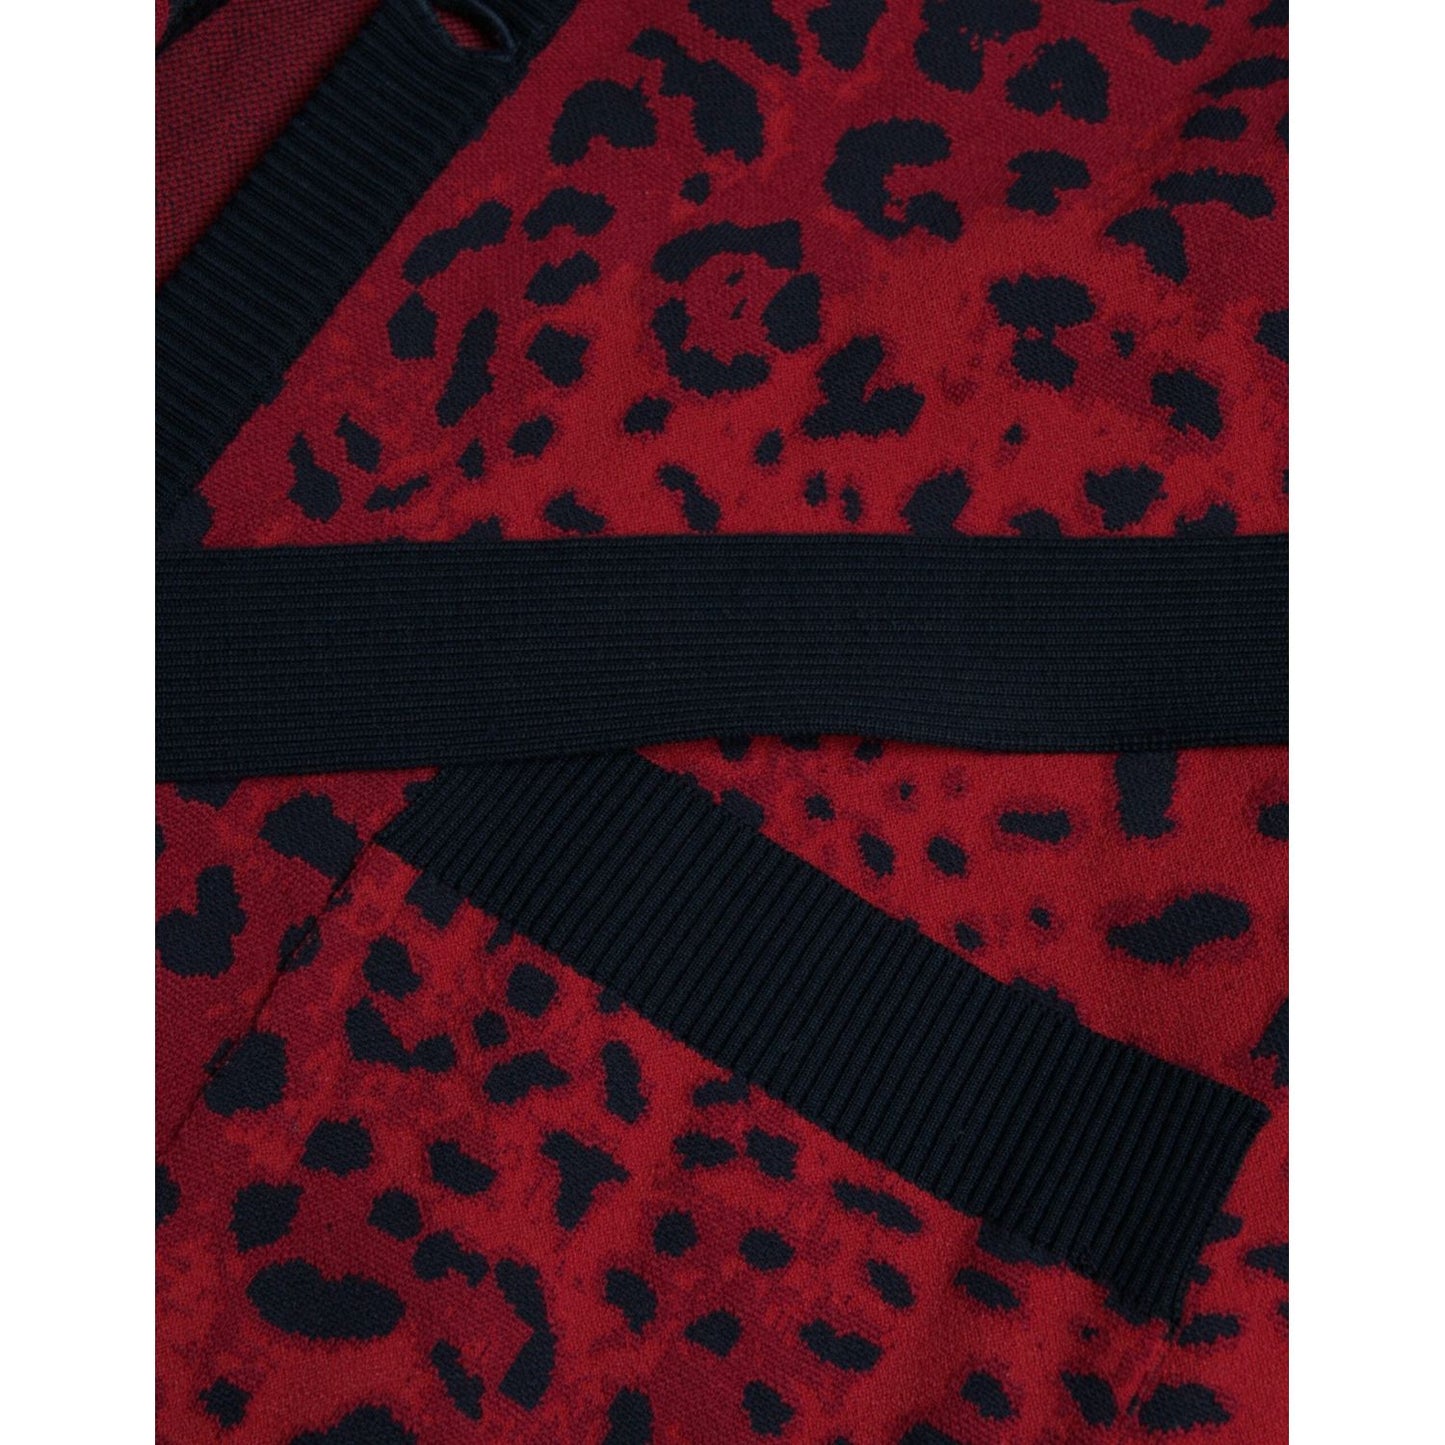 Dolce & Gabbana Red Leopard Wool Robe Belted Cardigan Sweater red-leopard-wool-robe-belted-cardigan-sweater